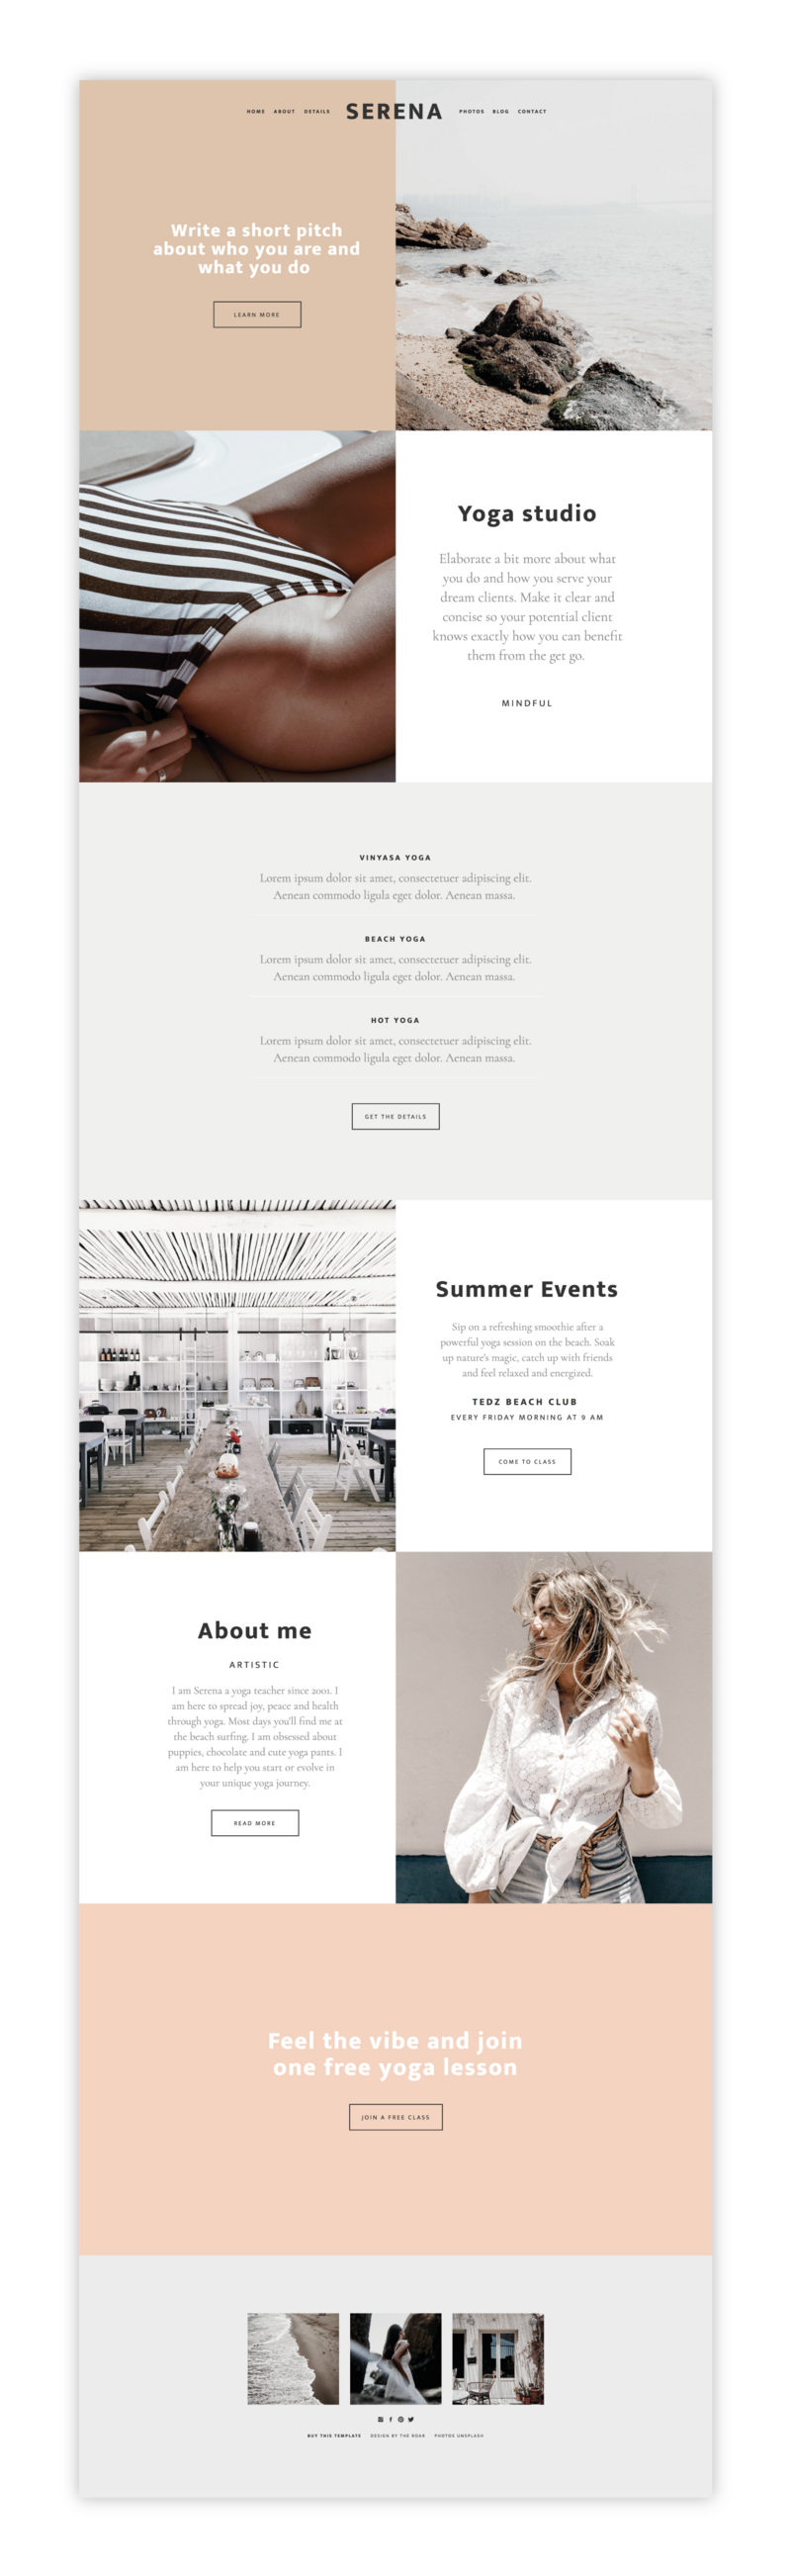 The-Roar-Showit-Web-Design-Website-Template-Creative-Business-Layout-Serena-1